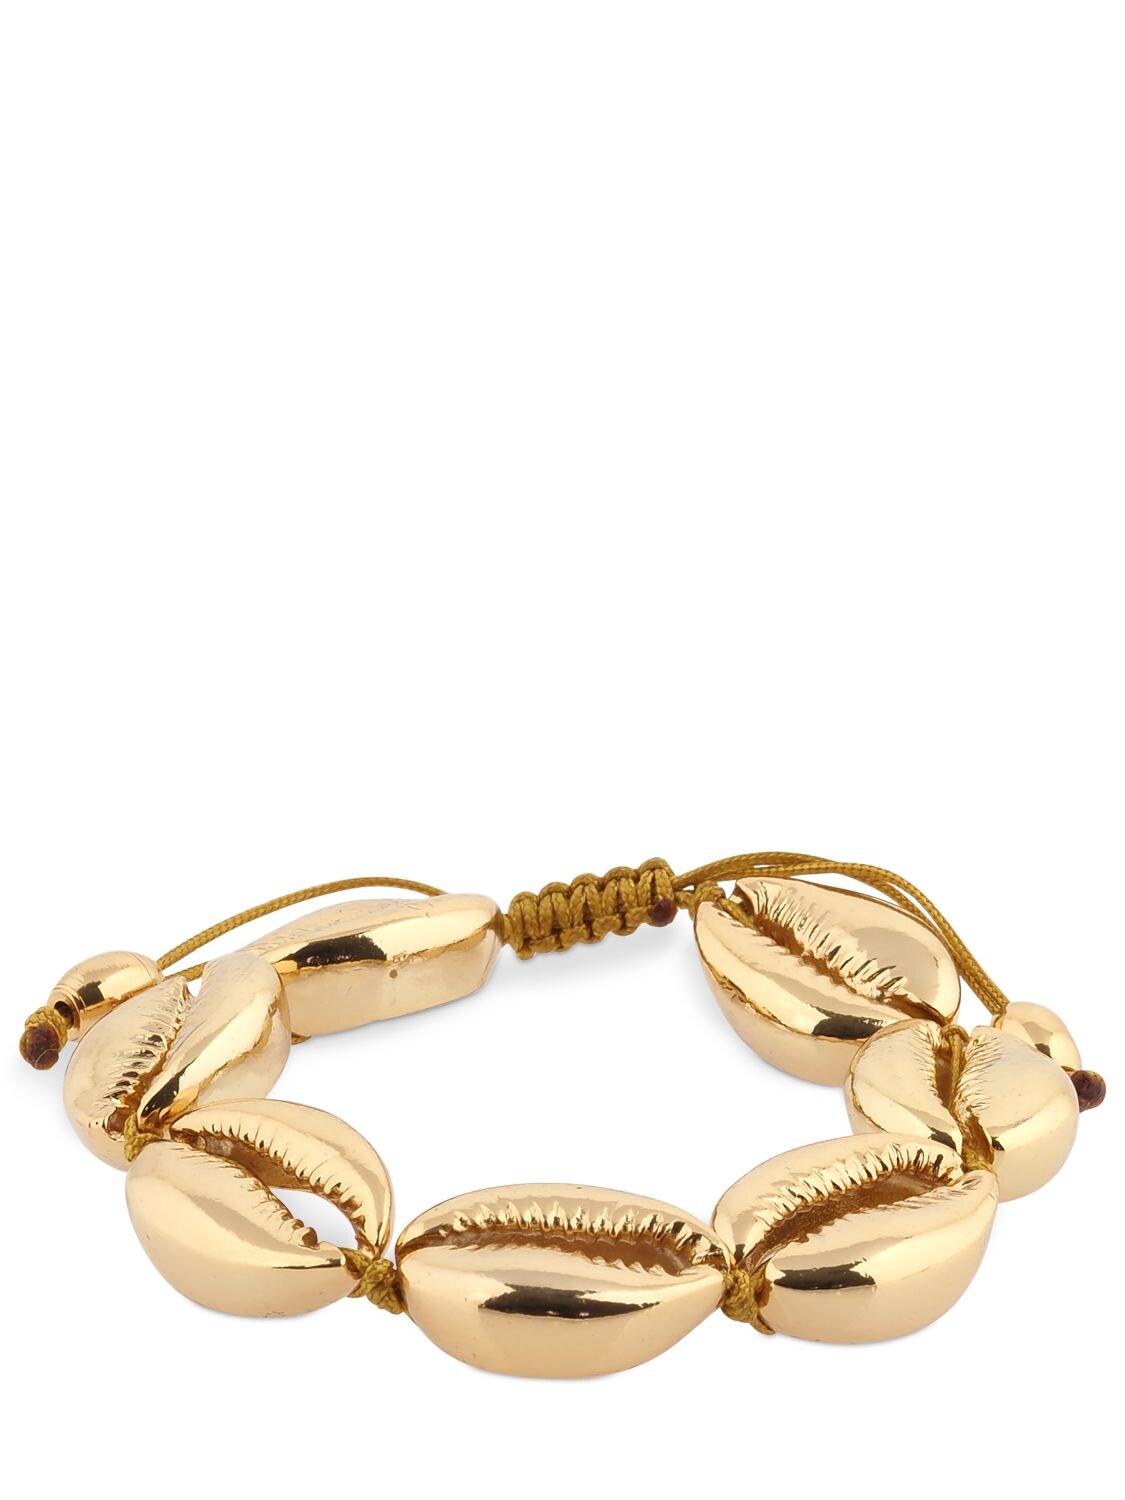 Tohum Design Large Faux Puka Shell Bracelet In Gold